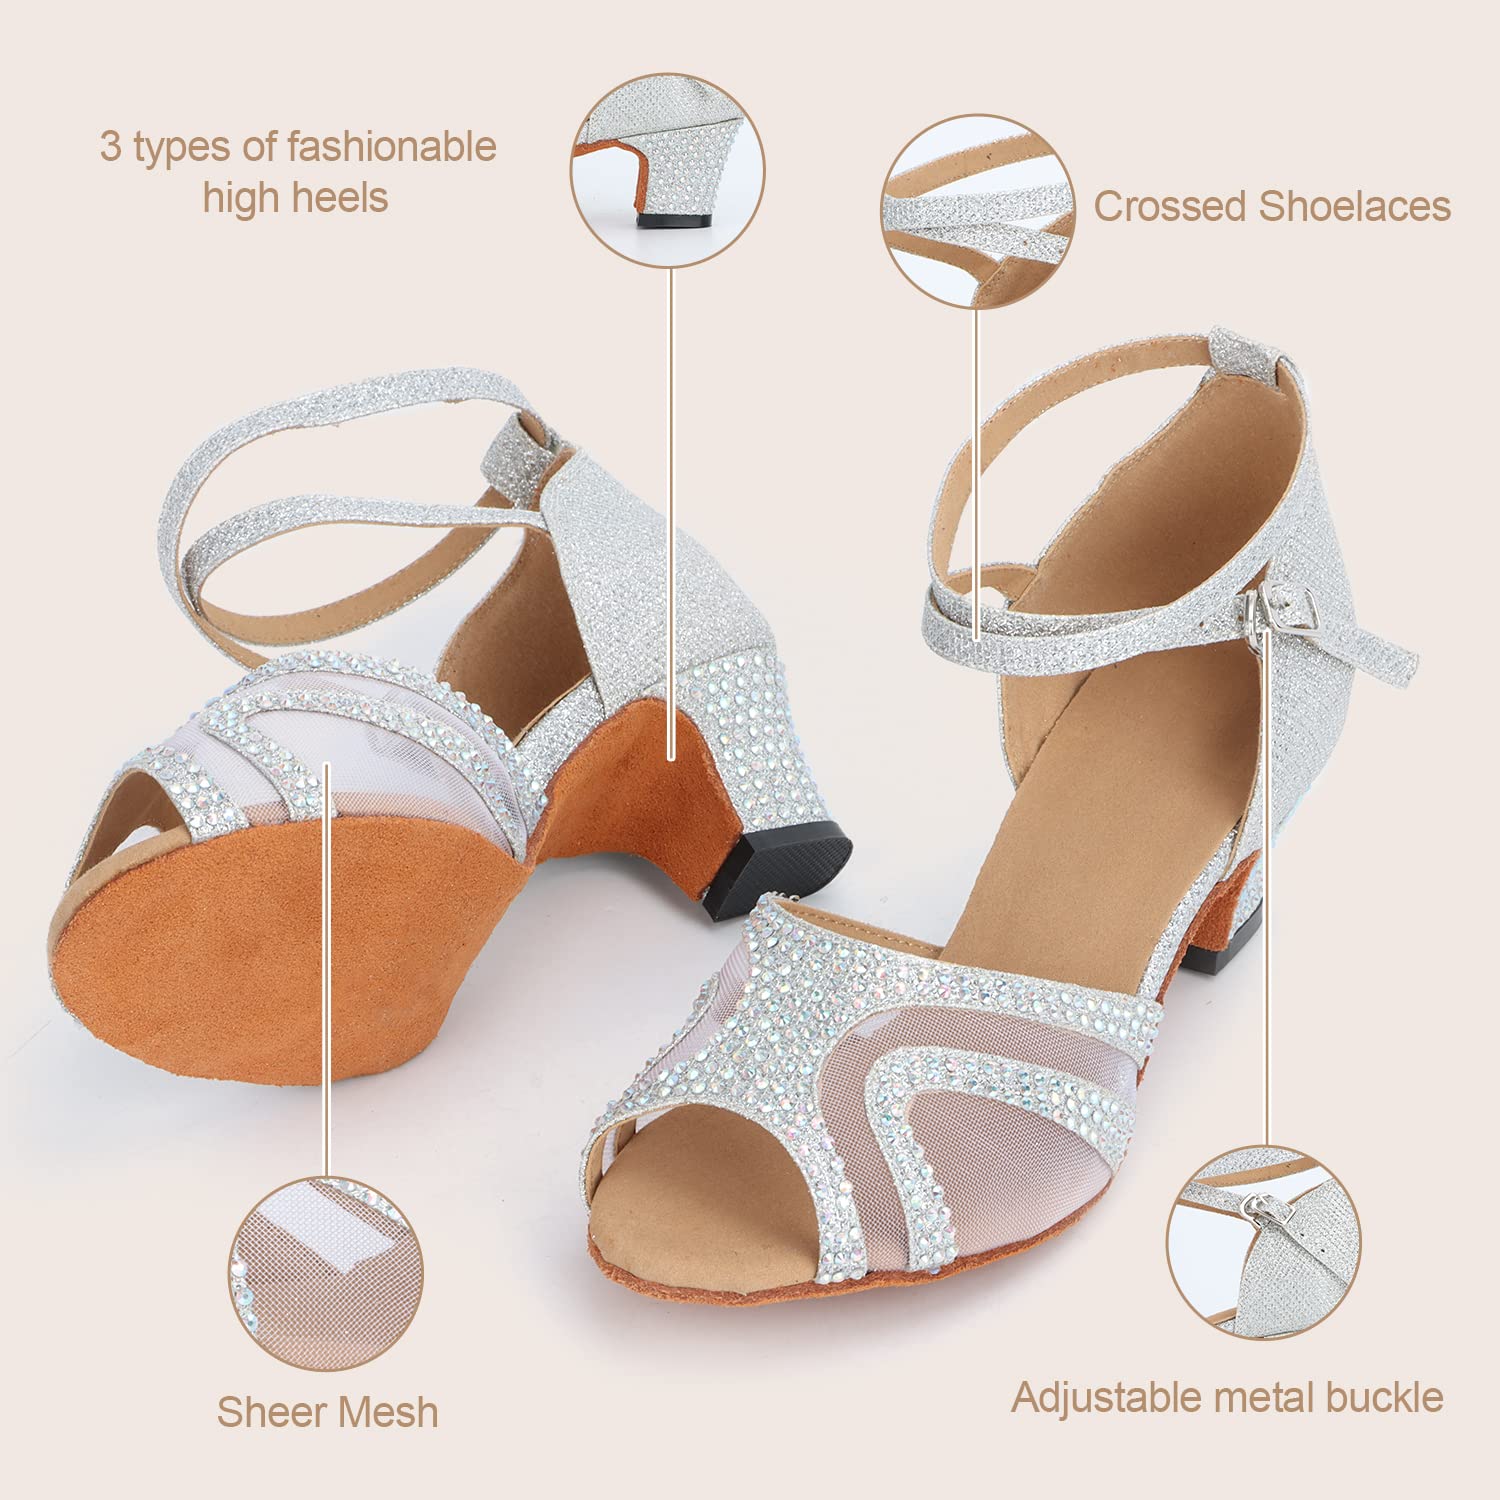 FUKZTE Womens Ballroom Dance Shoes for Social Salsa Latin Dance Dress Shoes Womens Open Toe Dancing Shoes,silver 1.97 inch heel,6 US